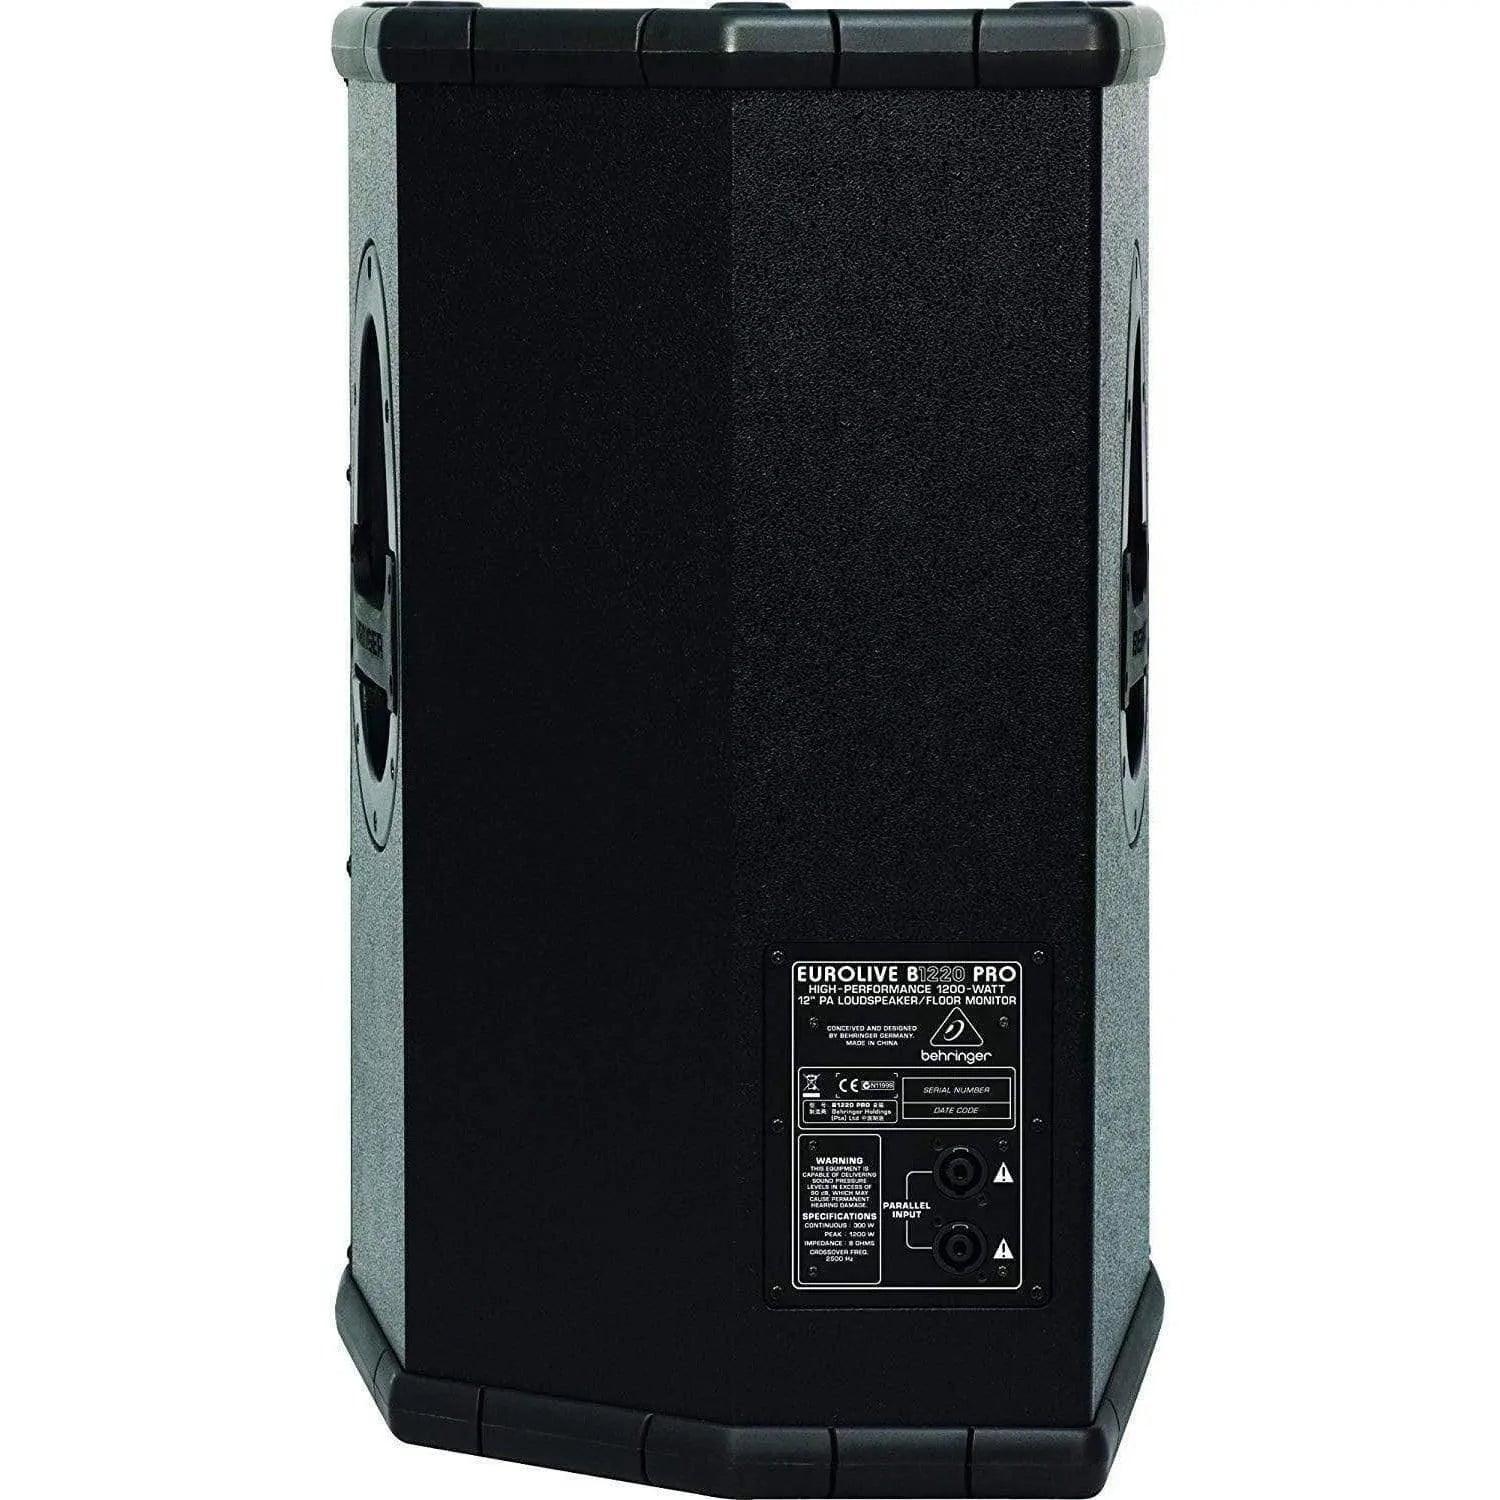 Behringer B1220PRO Professional 1,200-Watt 12" PA Loudspeaker System